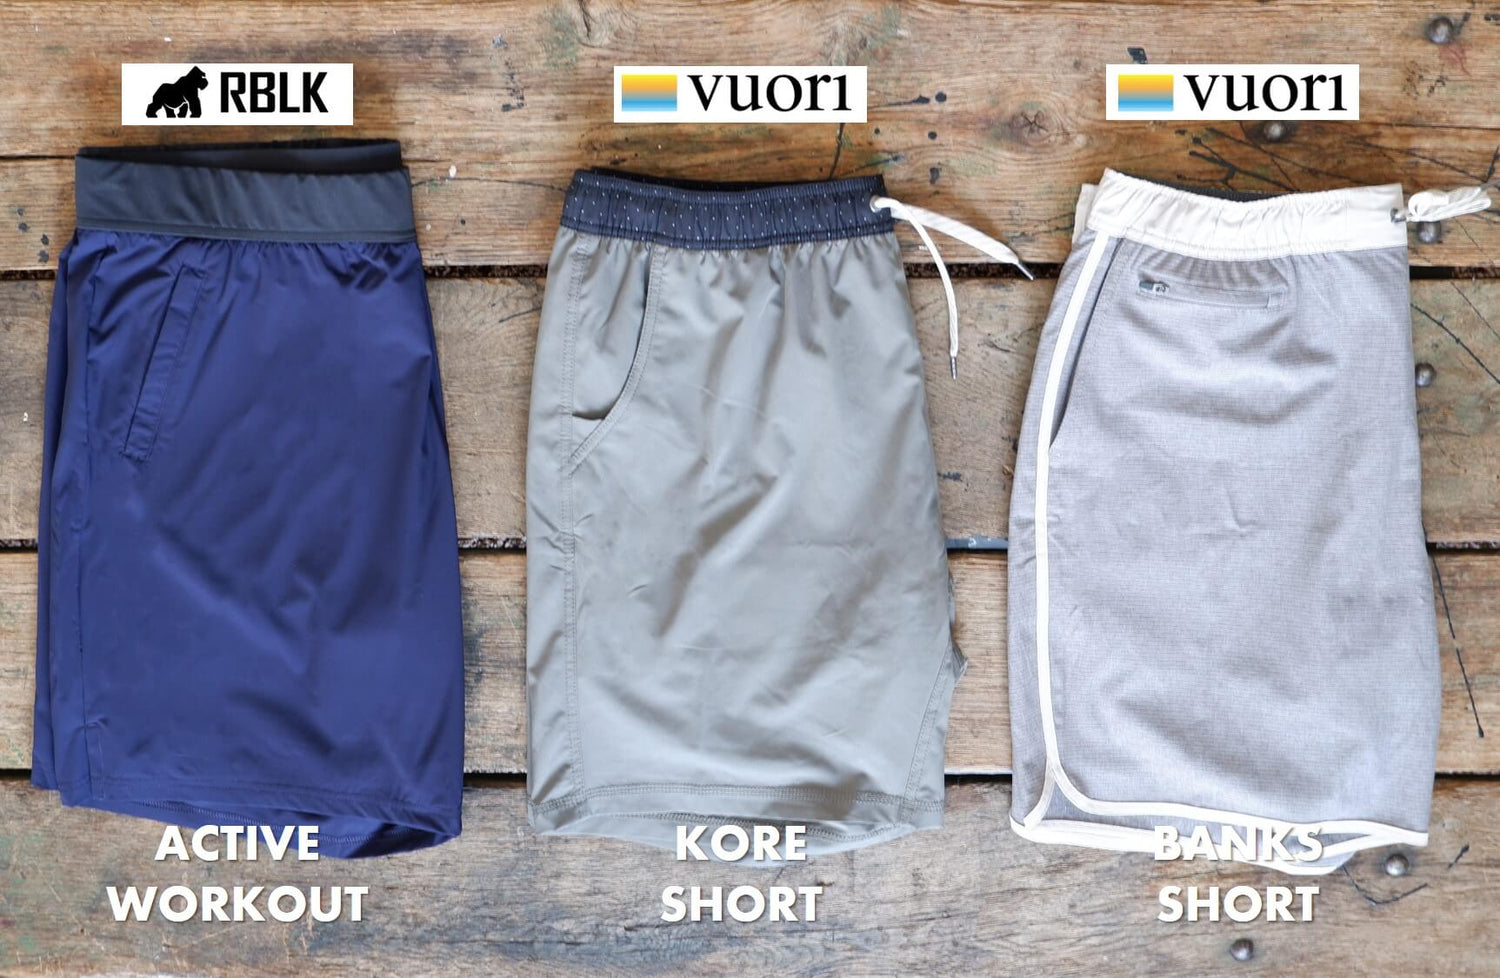 Vuori Kore Shorts Review: The most comfortable shorts I've ever